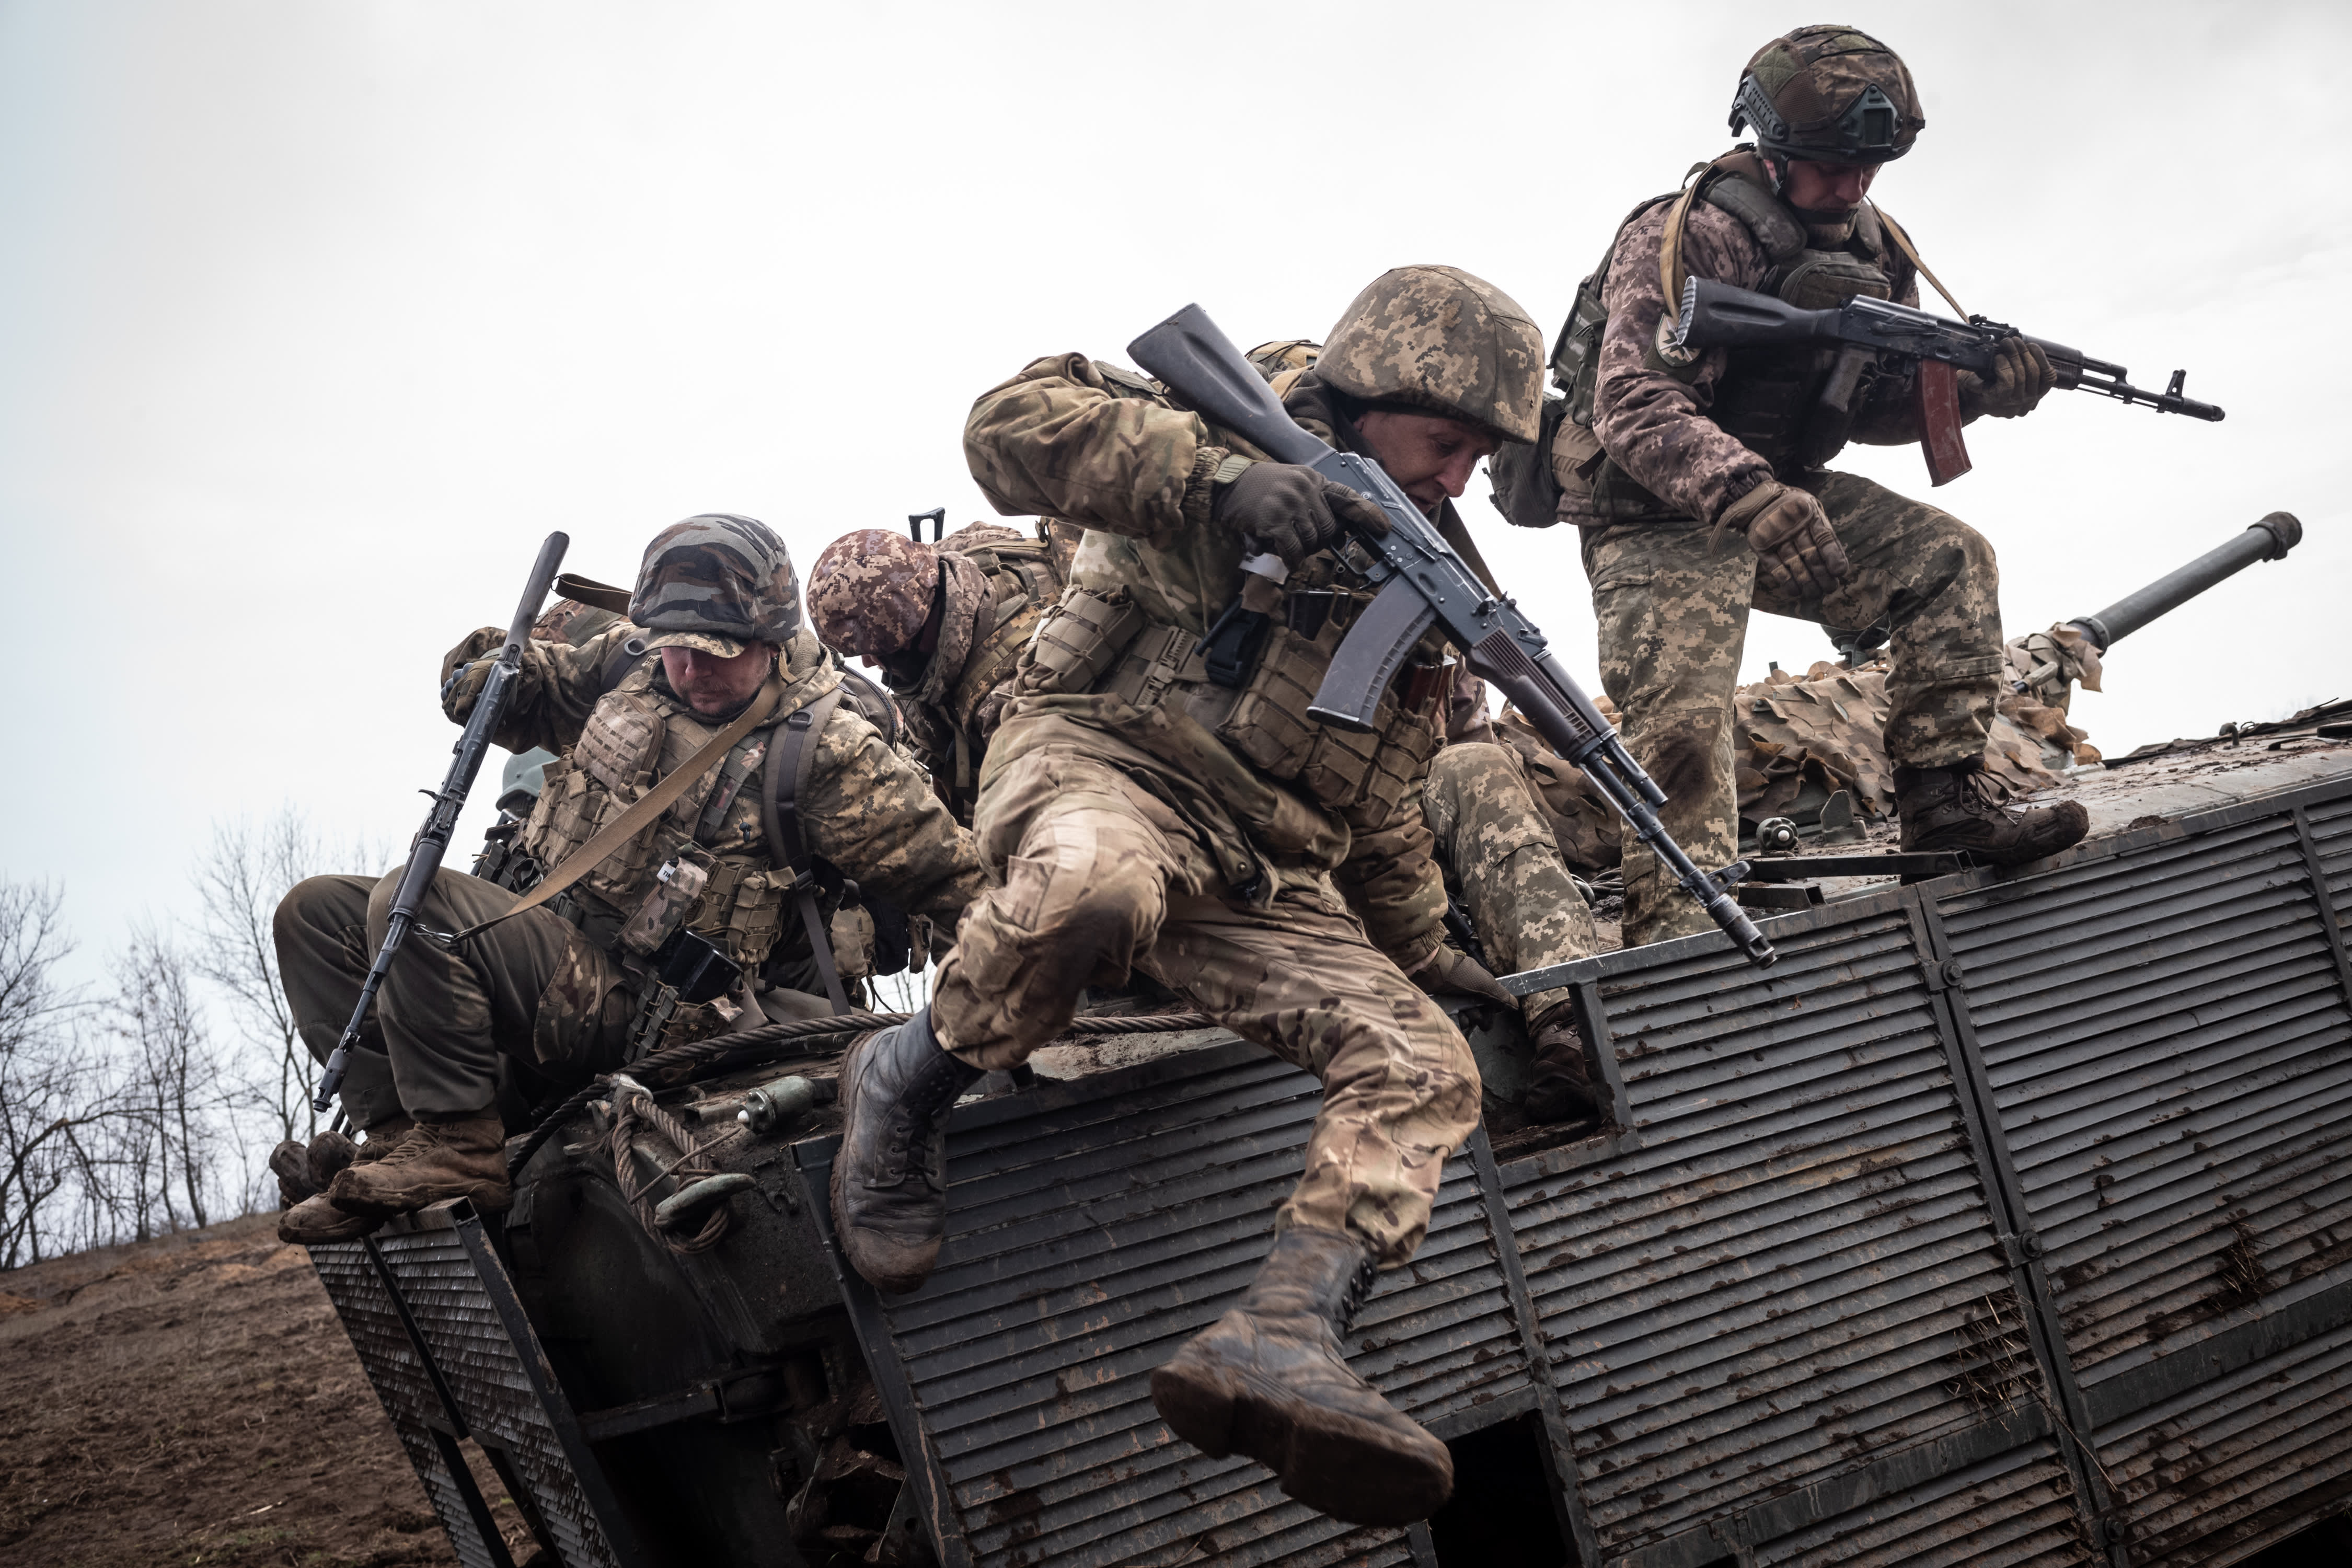 “Kemenangan” yang diinginkan Ukraina atas Rusia mungkin tidak dapat dicapai